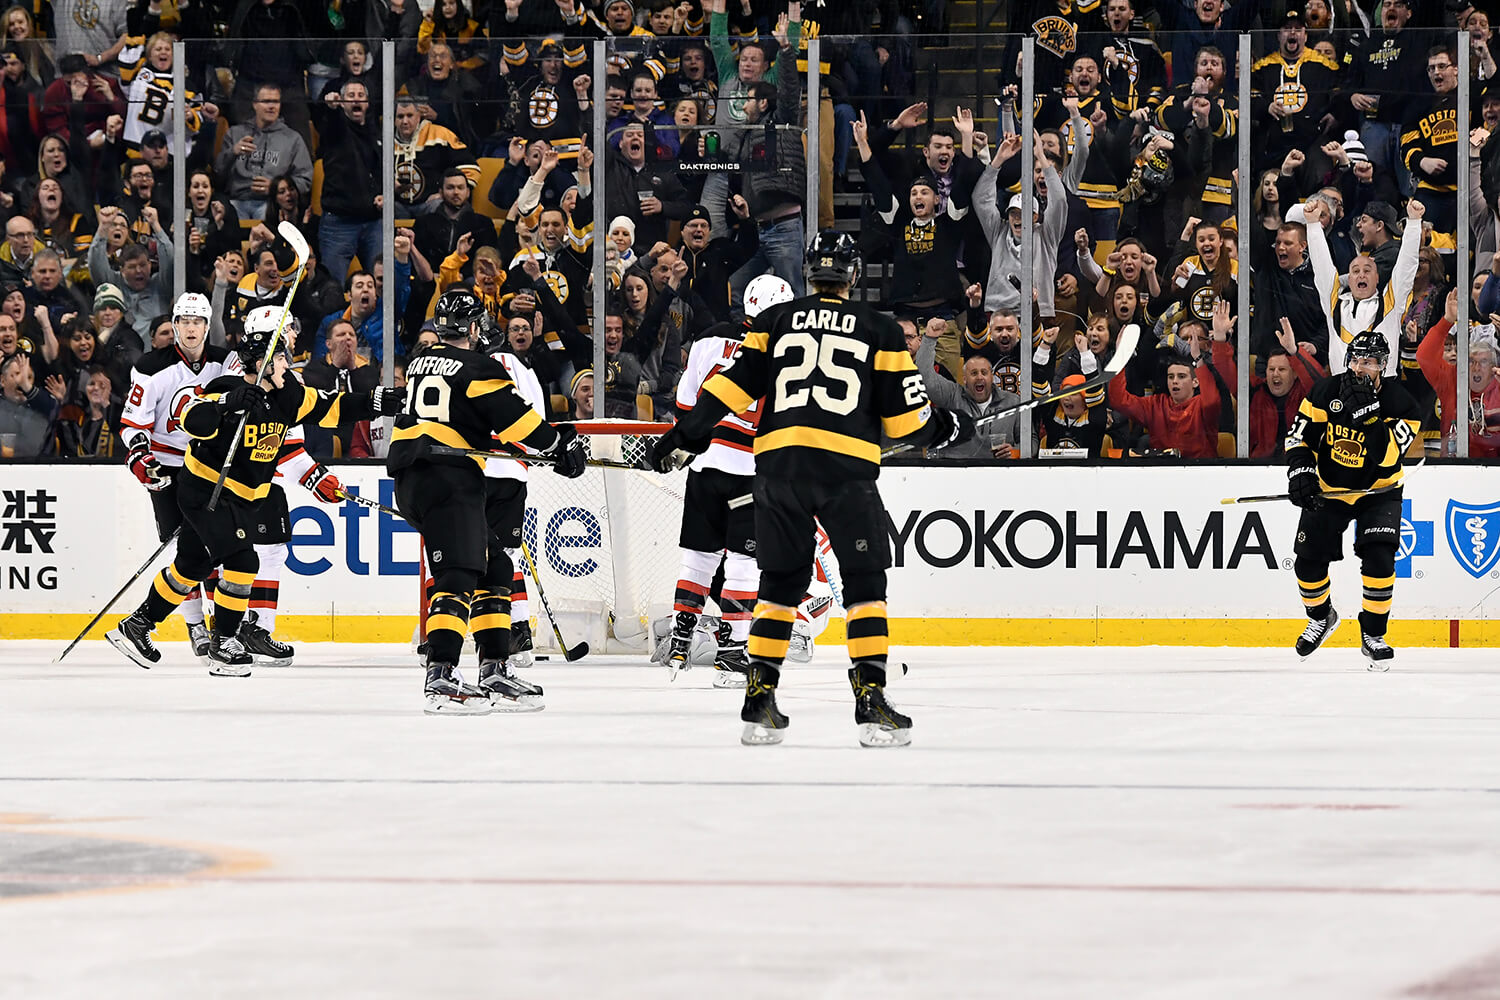 Photo Gallery: Devils vs Bruins (3/4/17)